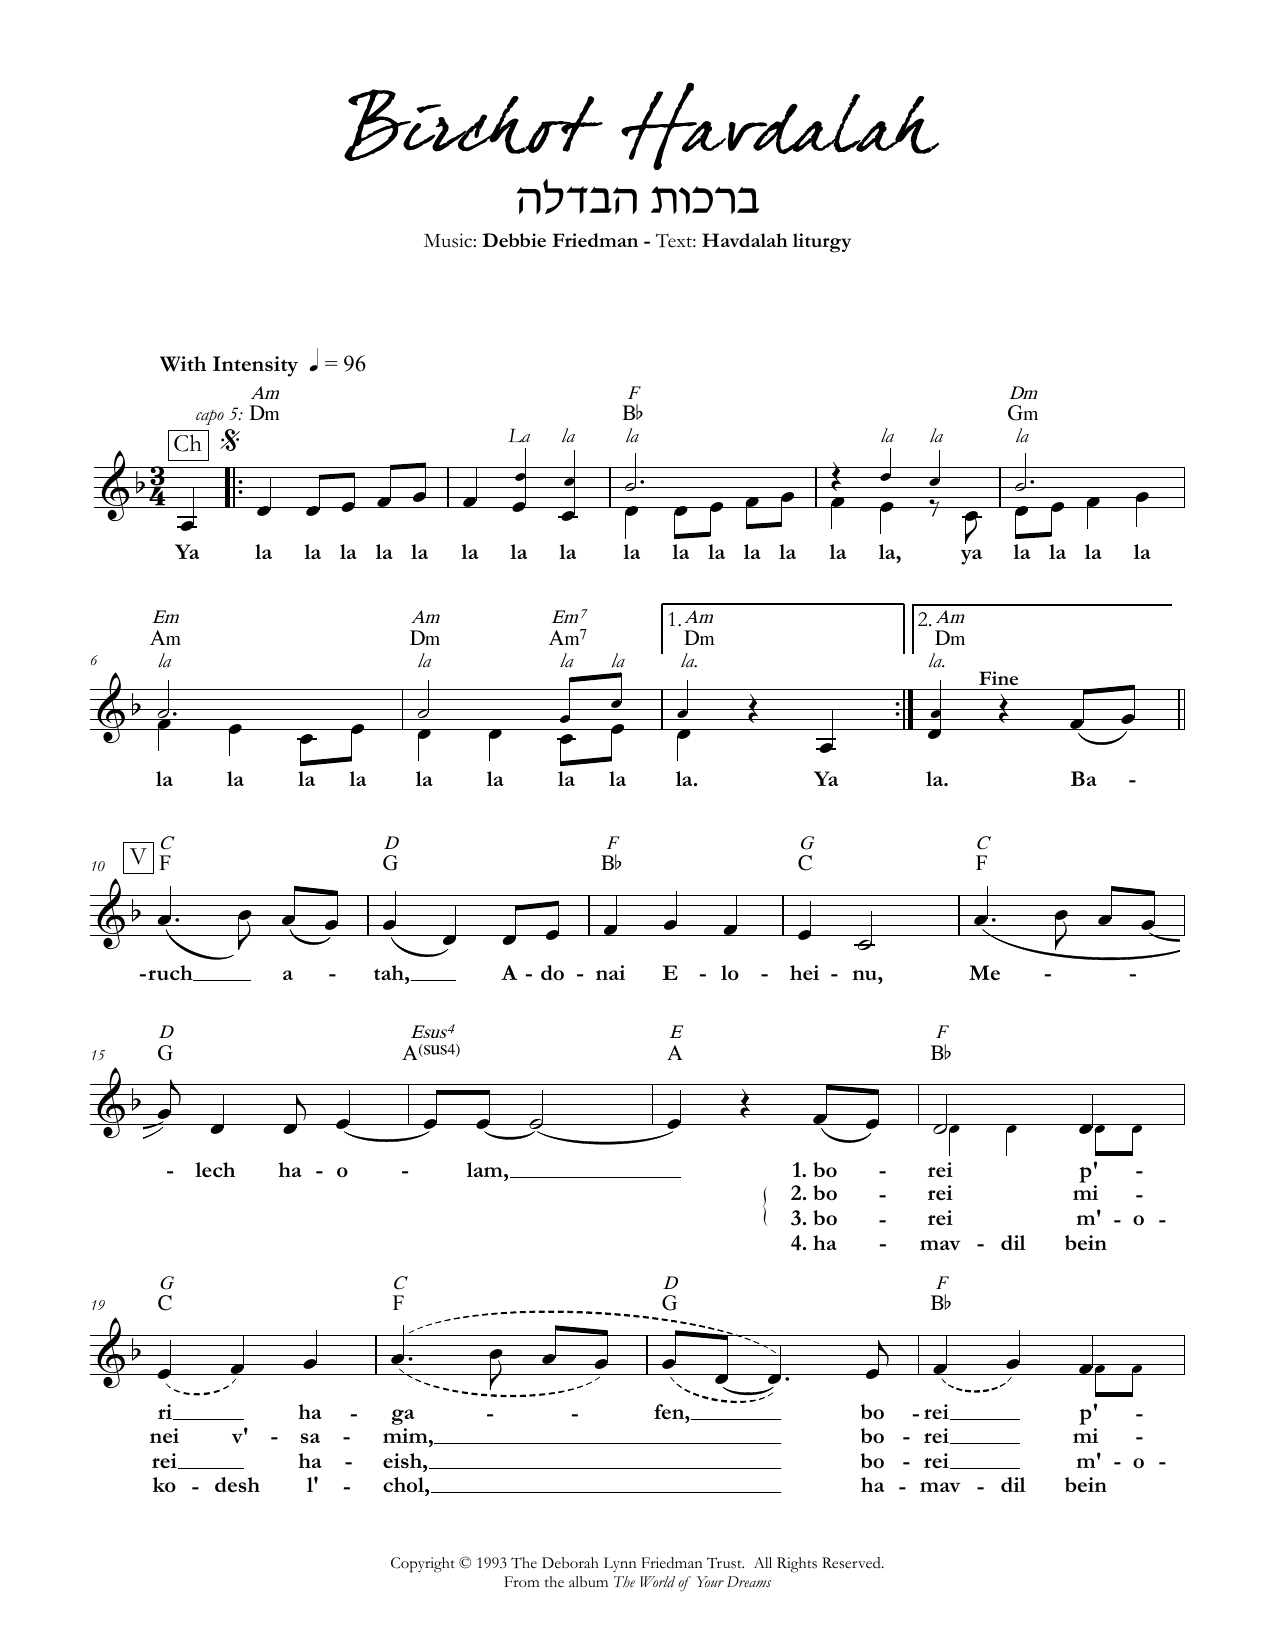 Debbie Friedman Birchot Havdalah Sheet Music Notes & Chords for Lead Sheet / Fake Book - Download or Print PDF